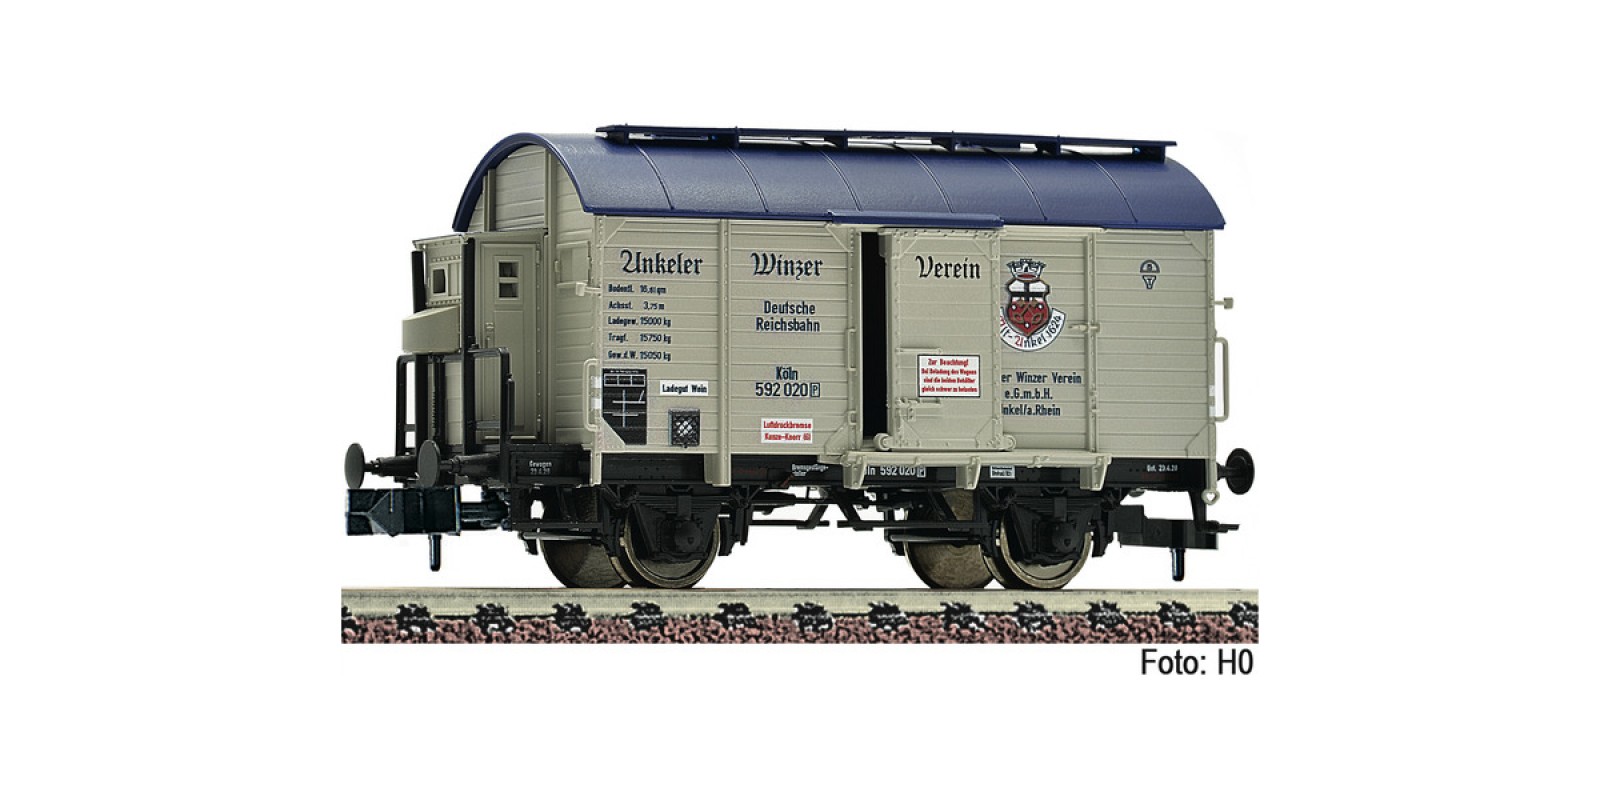 FL845708 Wine barrel tank wagon "Unkeler Winzer Verein", DRG